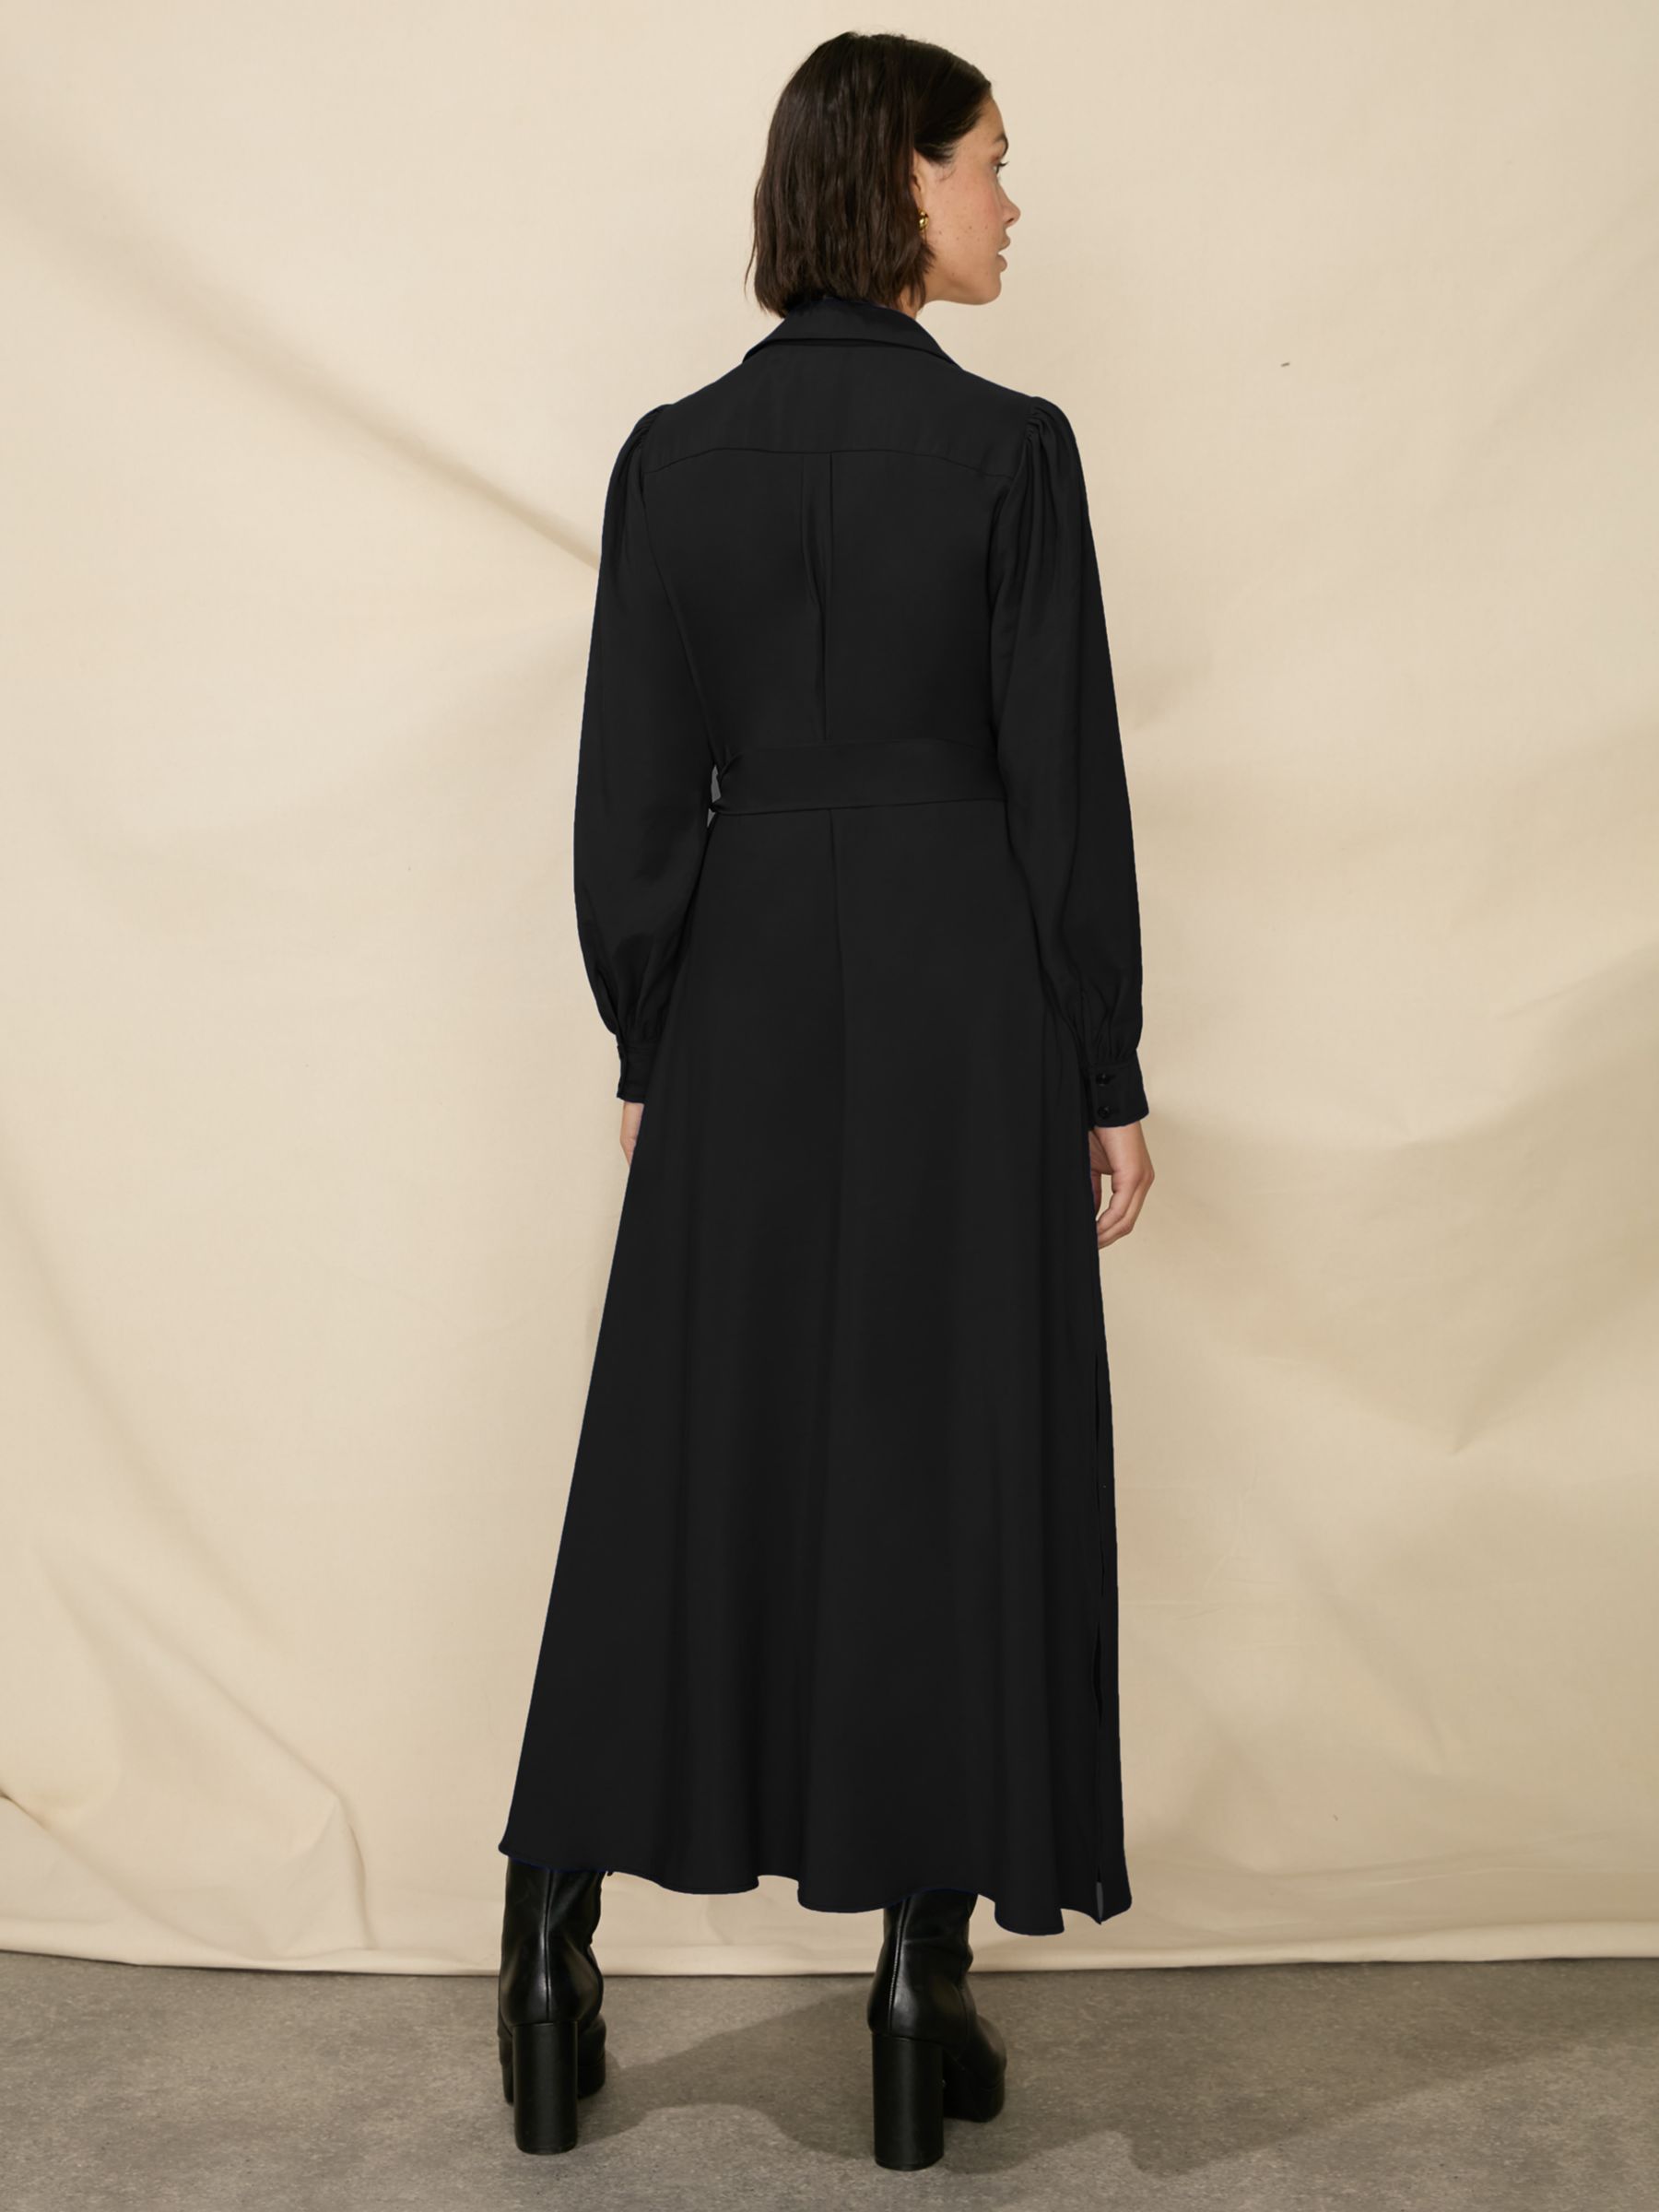 Ro&Zo Petite Modal Pocket Detail Shirt Dress, Black, 6